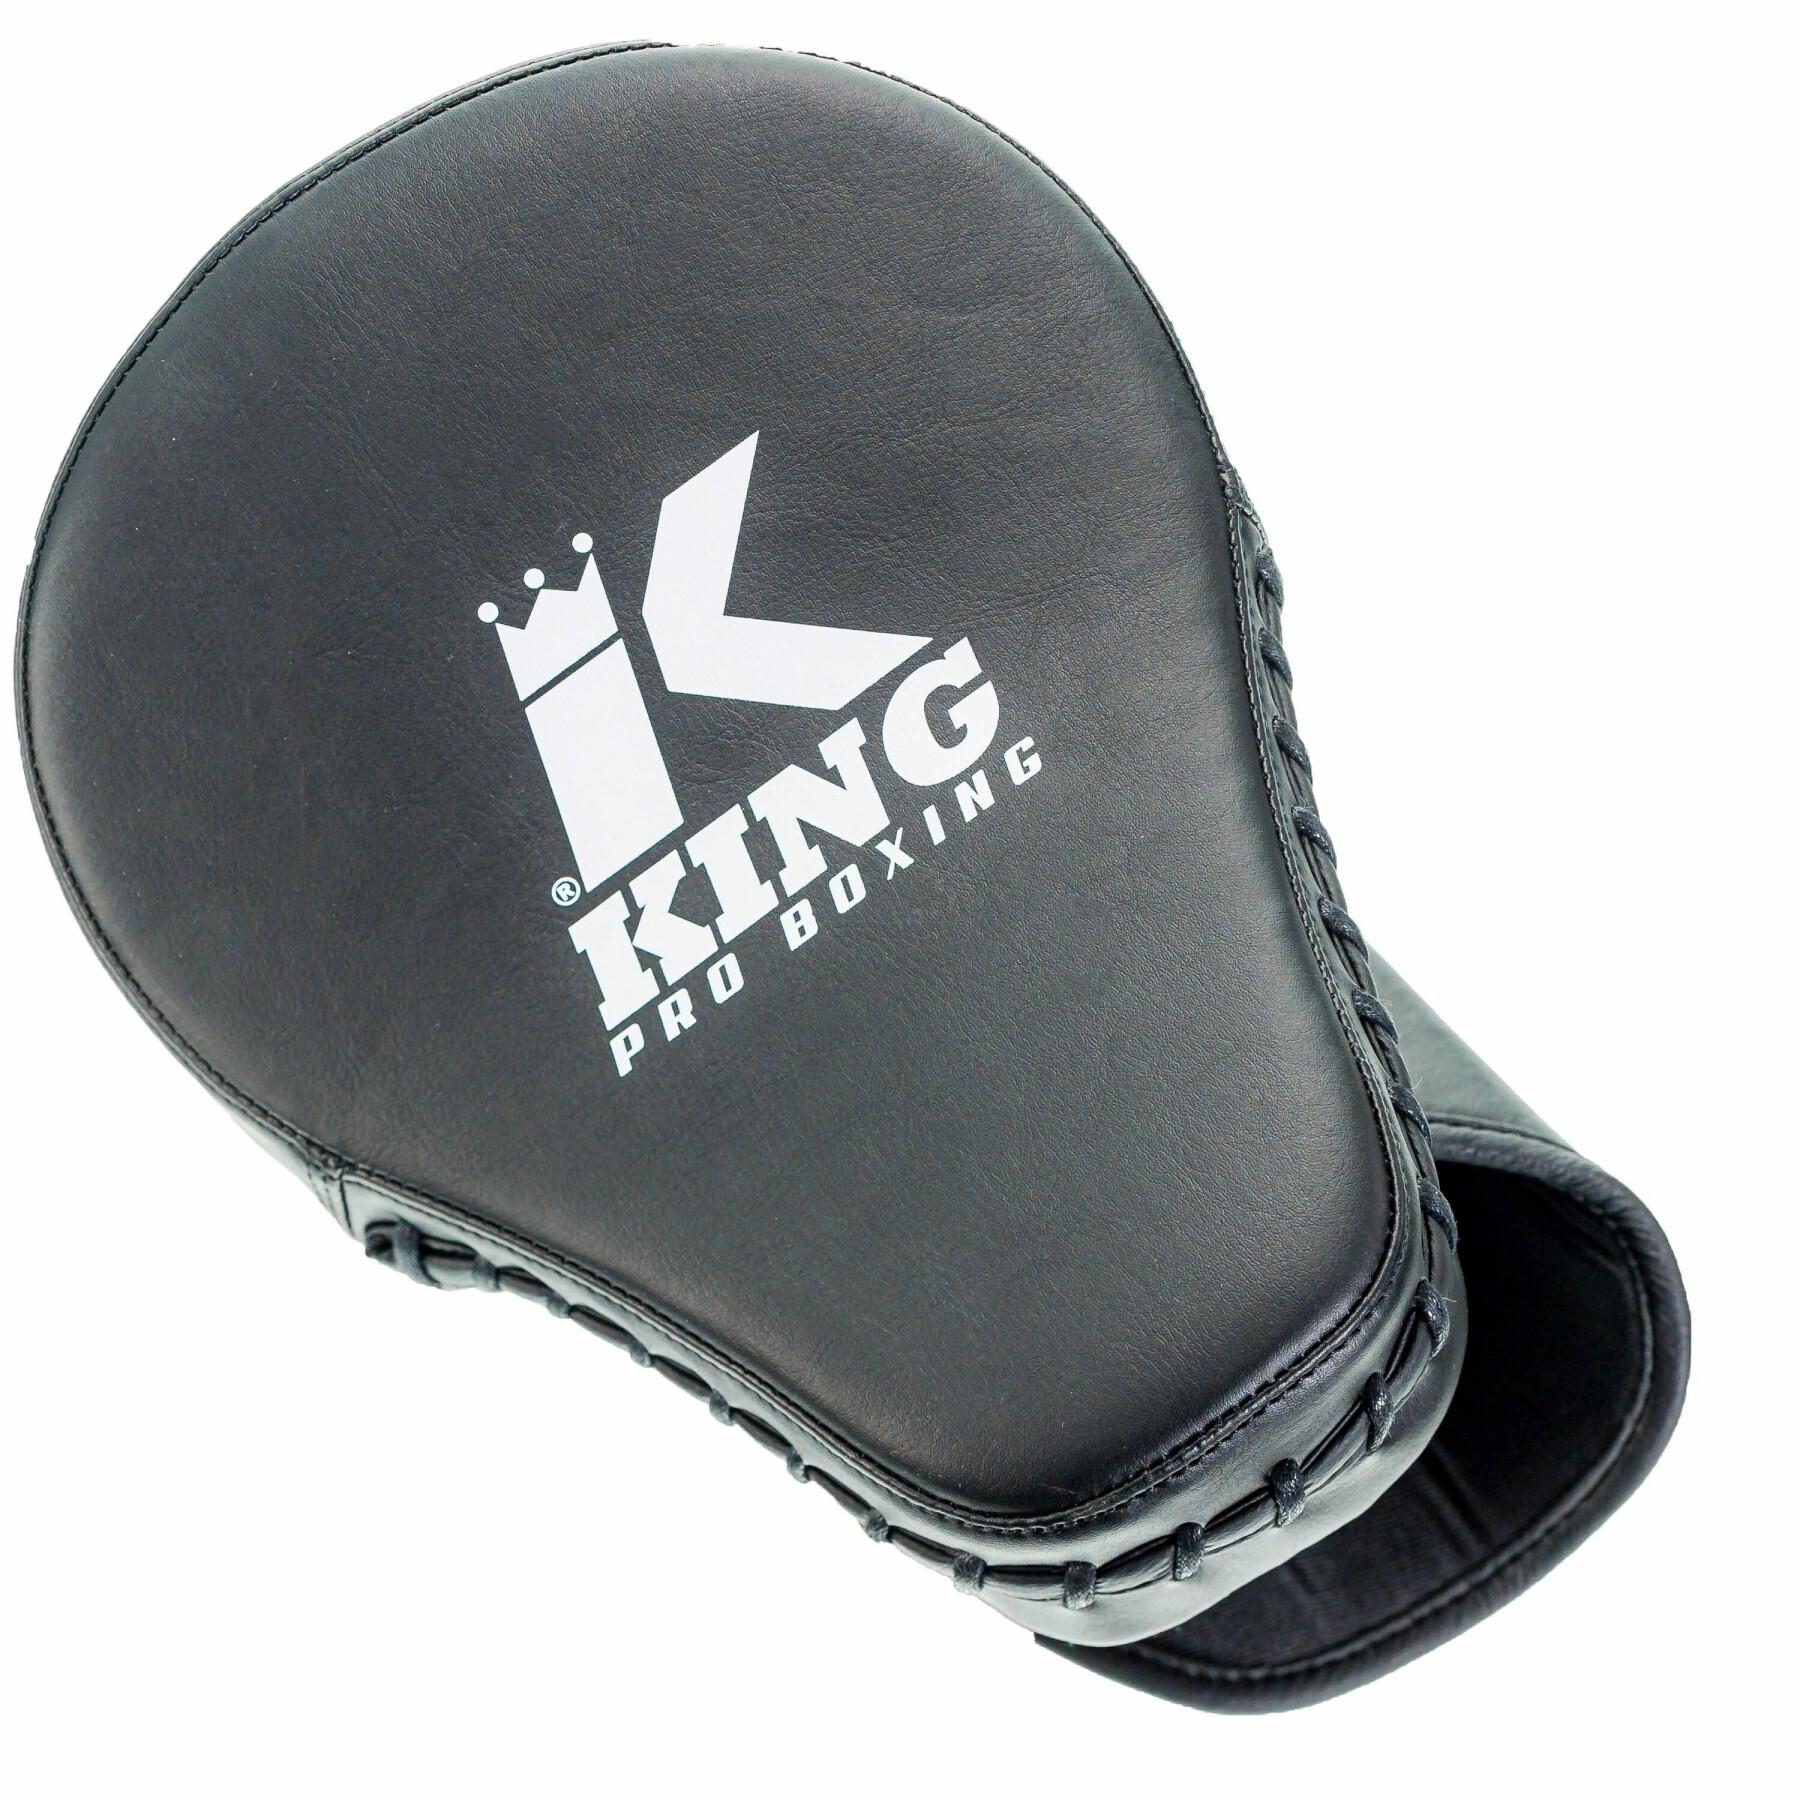 Patas de oso King Pro Boxing Kpb/Fm Revo